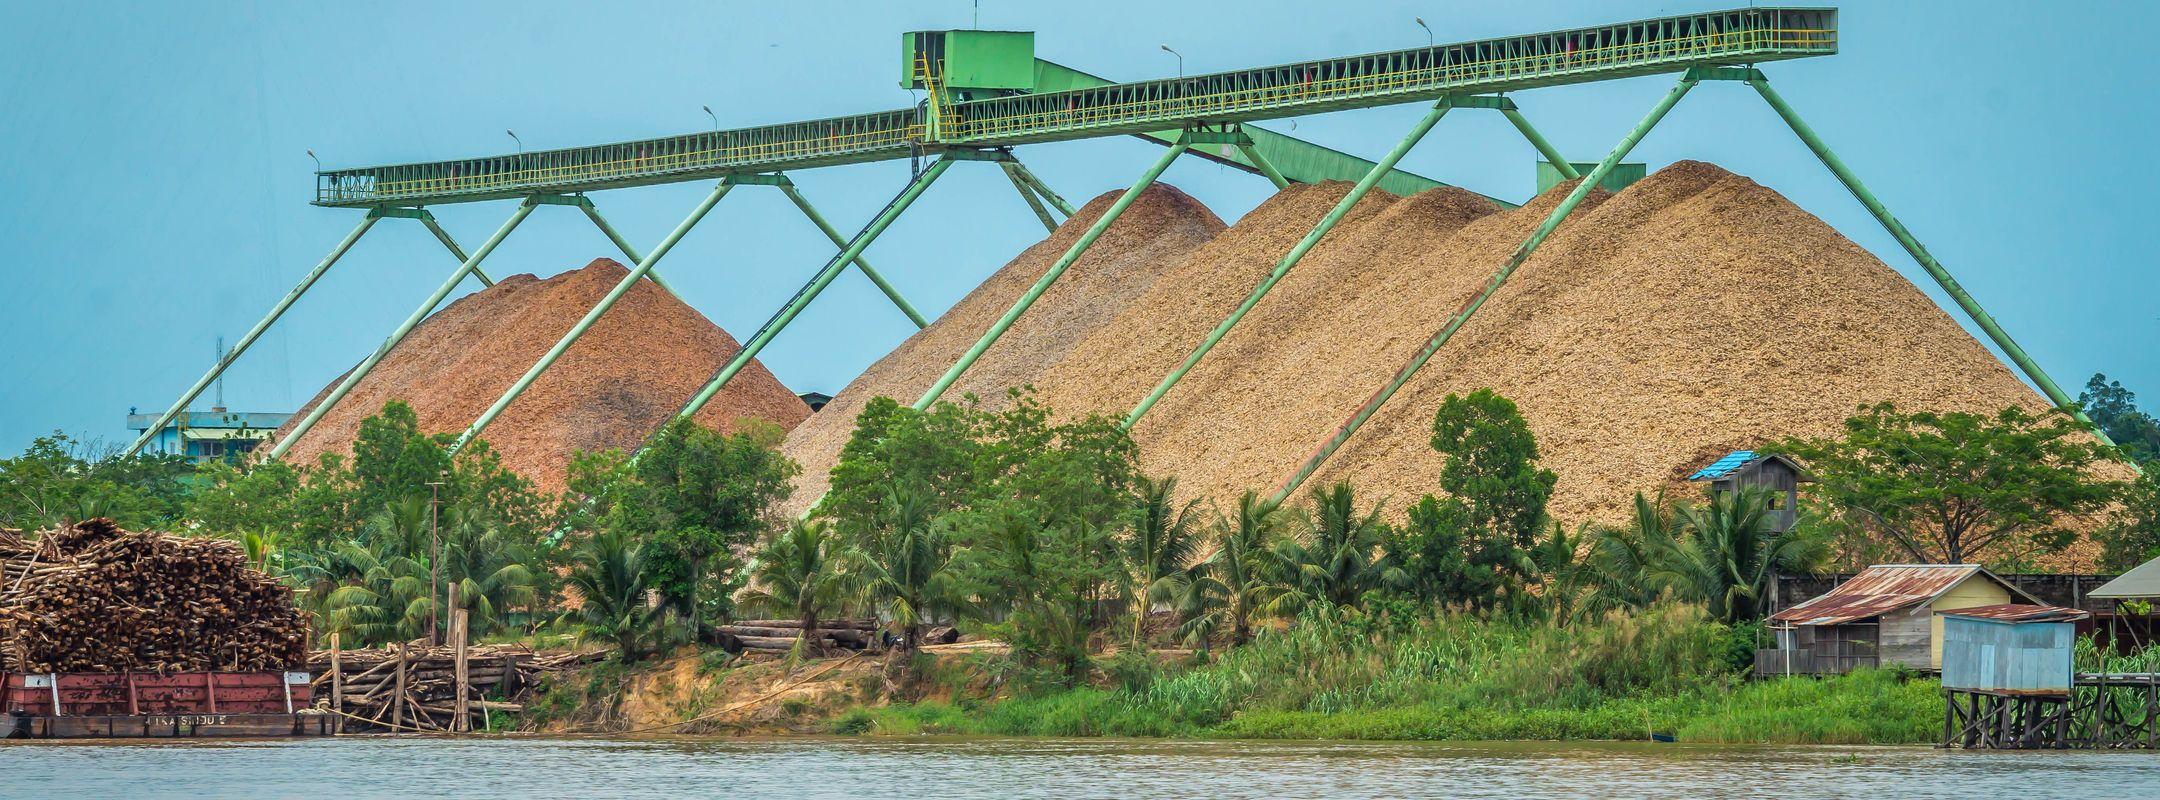 Wood chip factory on Mahakam riverbank with conveyor and stockpile, Indonesia (hilmawan nurhatmadi / Shutterstock)